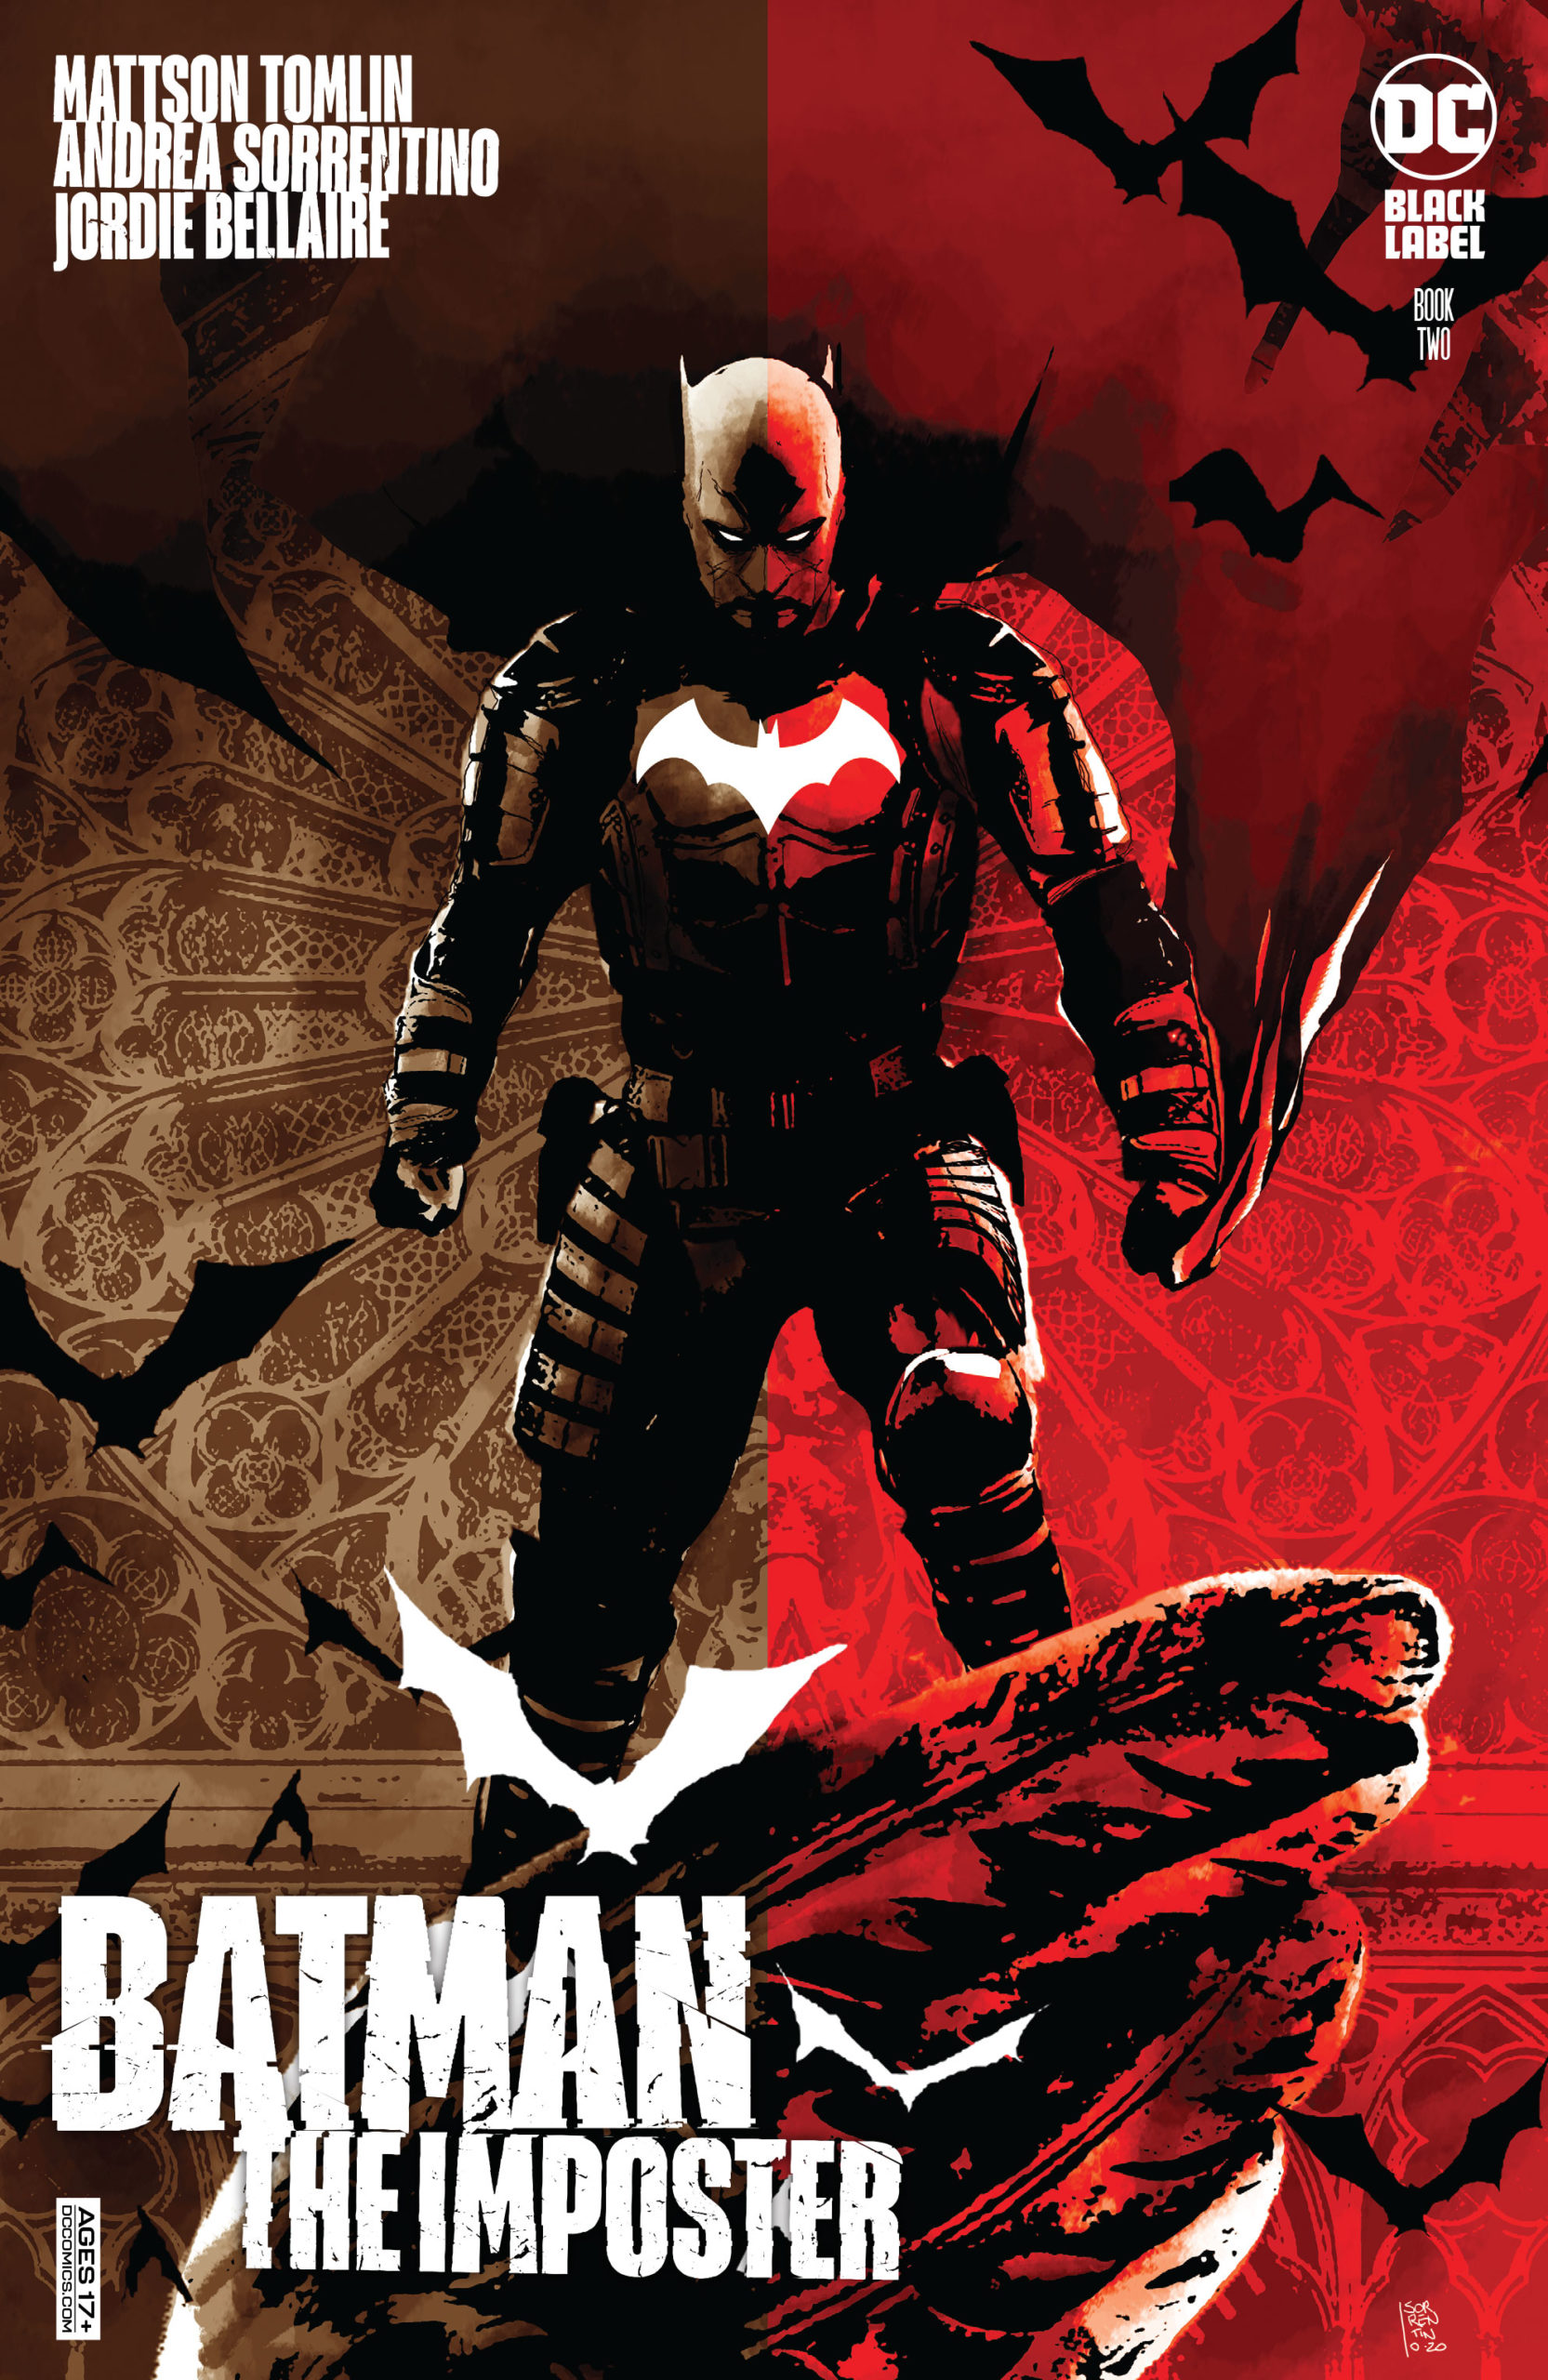 Review: Batman: The Imposter #2